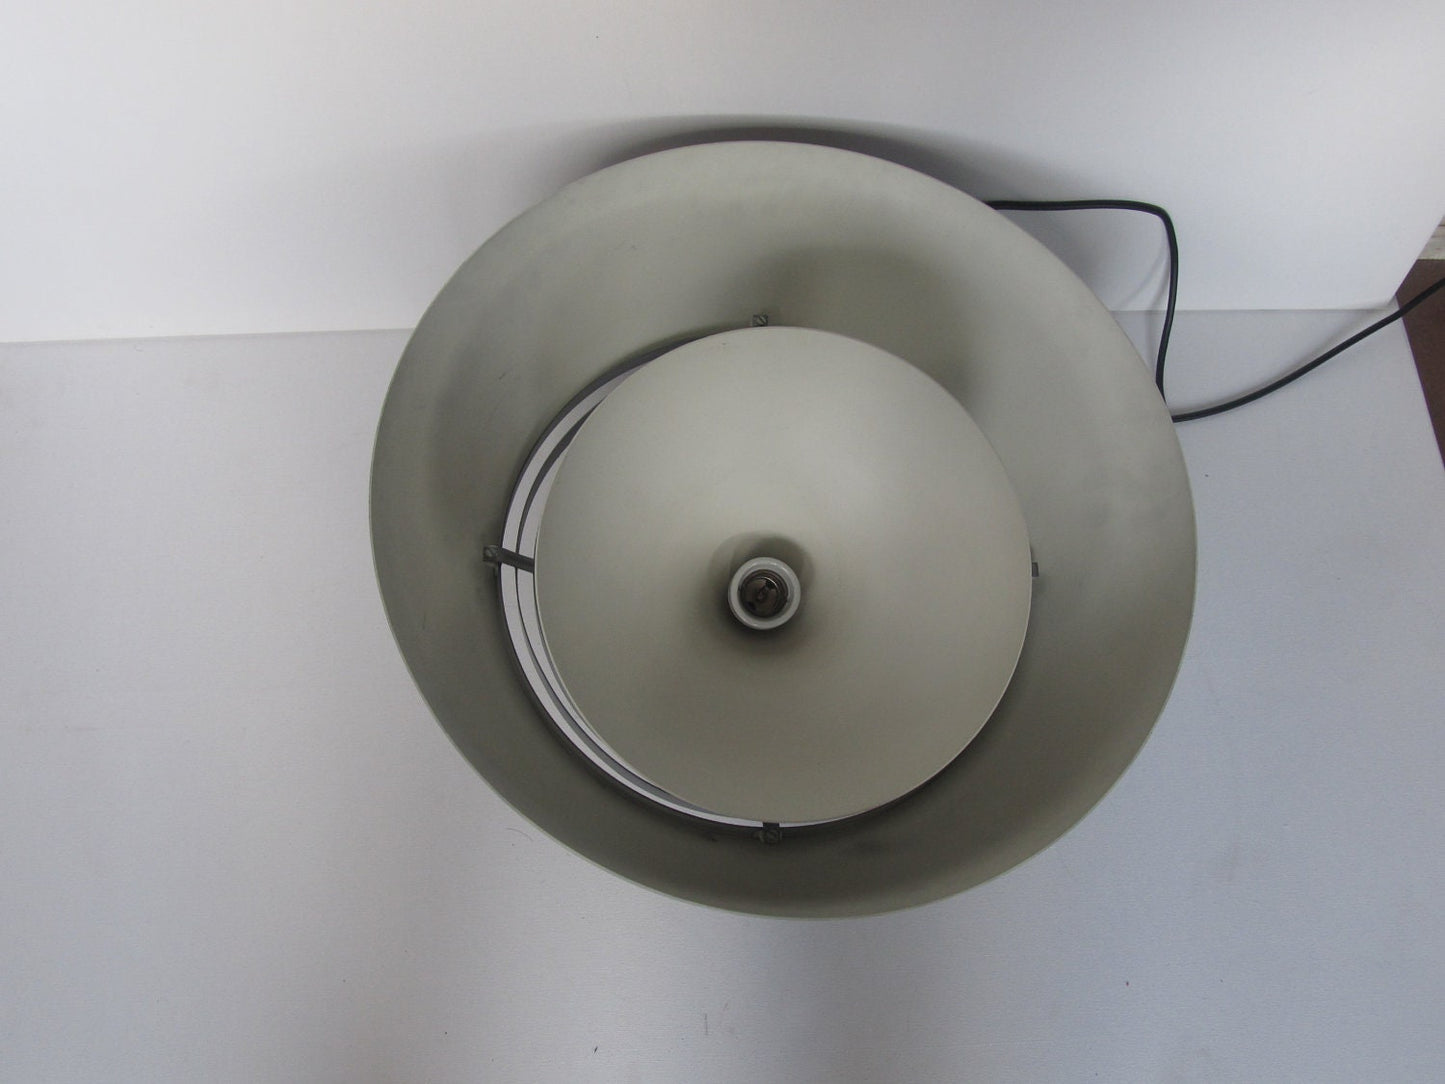 Arne Jacobsen AJ Royal ceiling light, for Danish manufacturer Louis Poulsen, known as AJ Royal Pendant